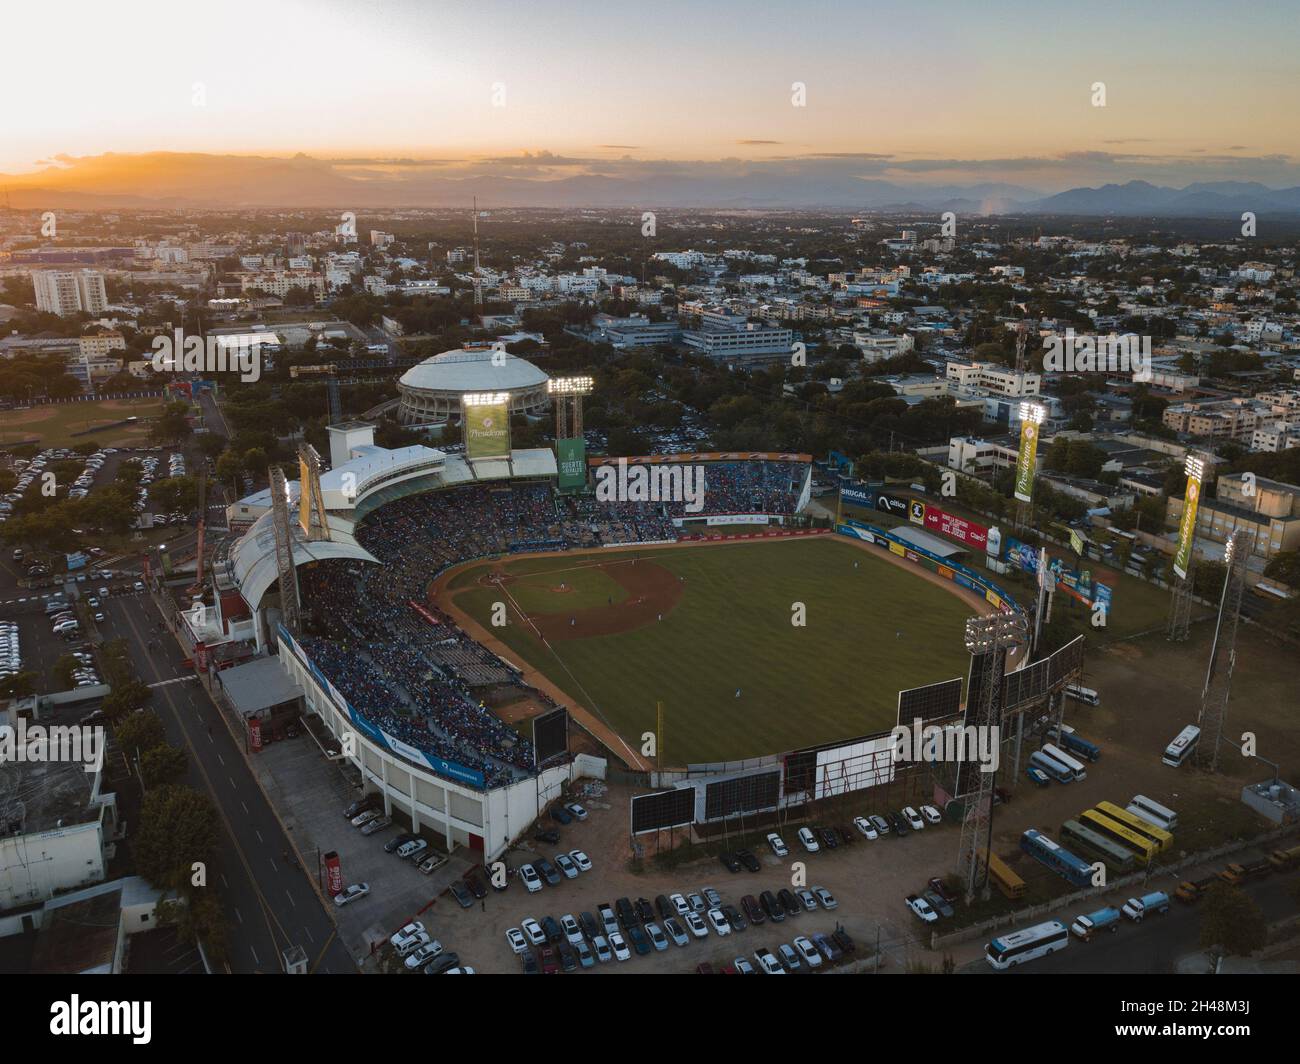 SANTO DOMINGO, DOMINICAN REPUBLIC - Dec 02, 2018: A landscape of the Quisqueya Baseball Stadium during the sunset in Santo Domingo, Dominican Republic Stock Photo